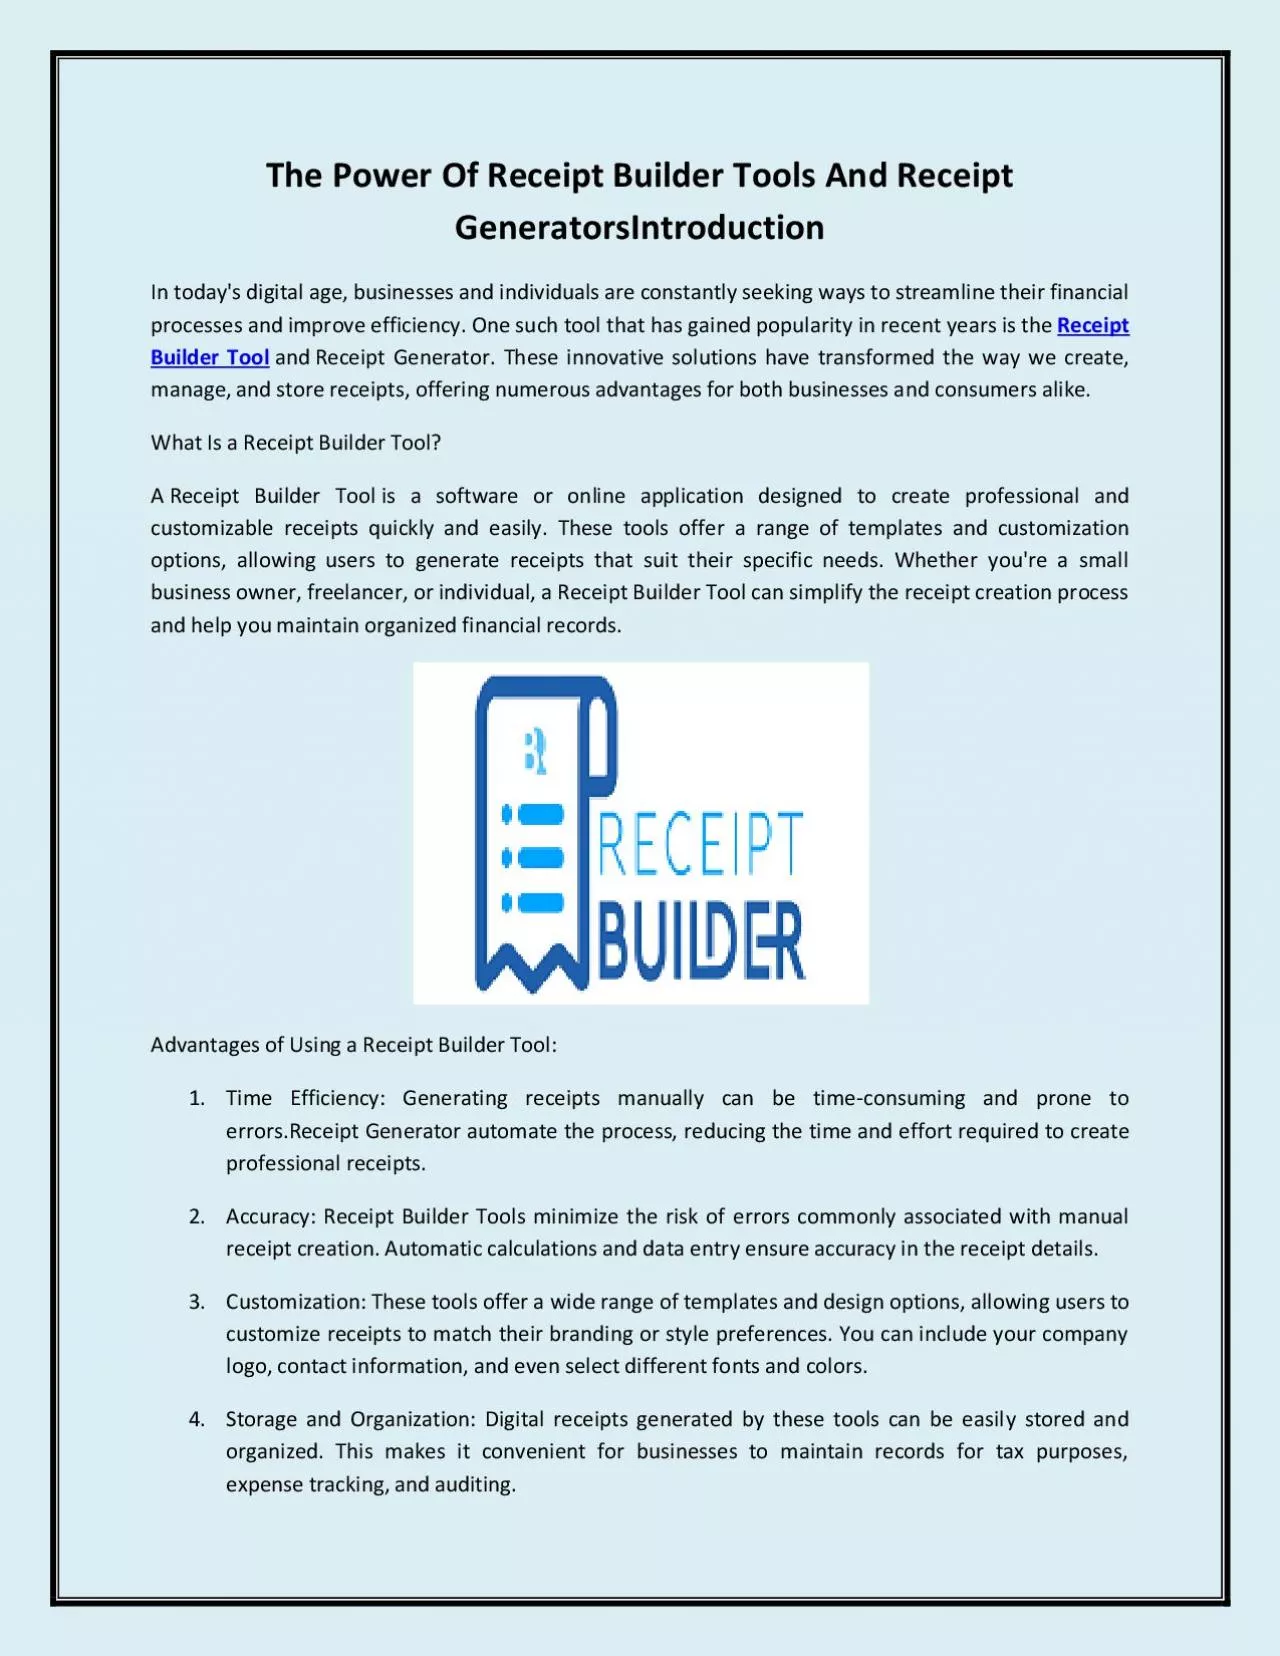 The Power Of Receipt Builder Tools And Receipt GeneratorsIntroduction